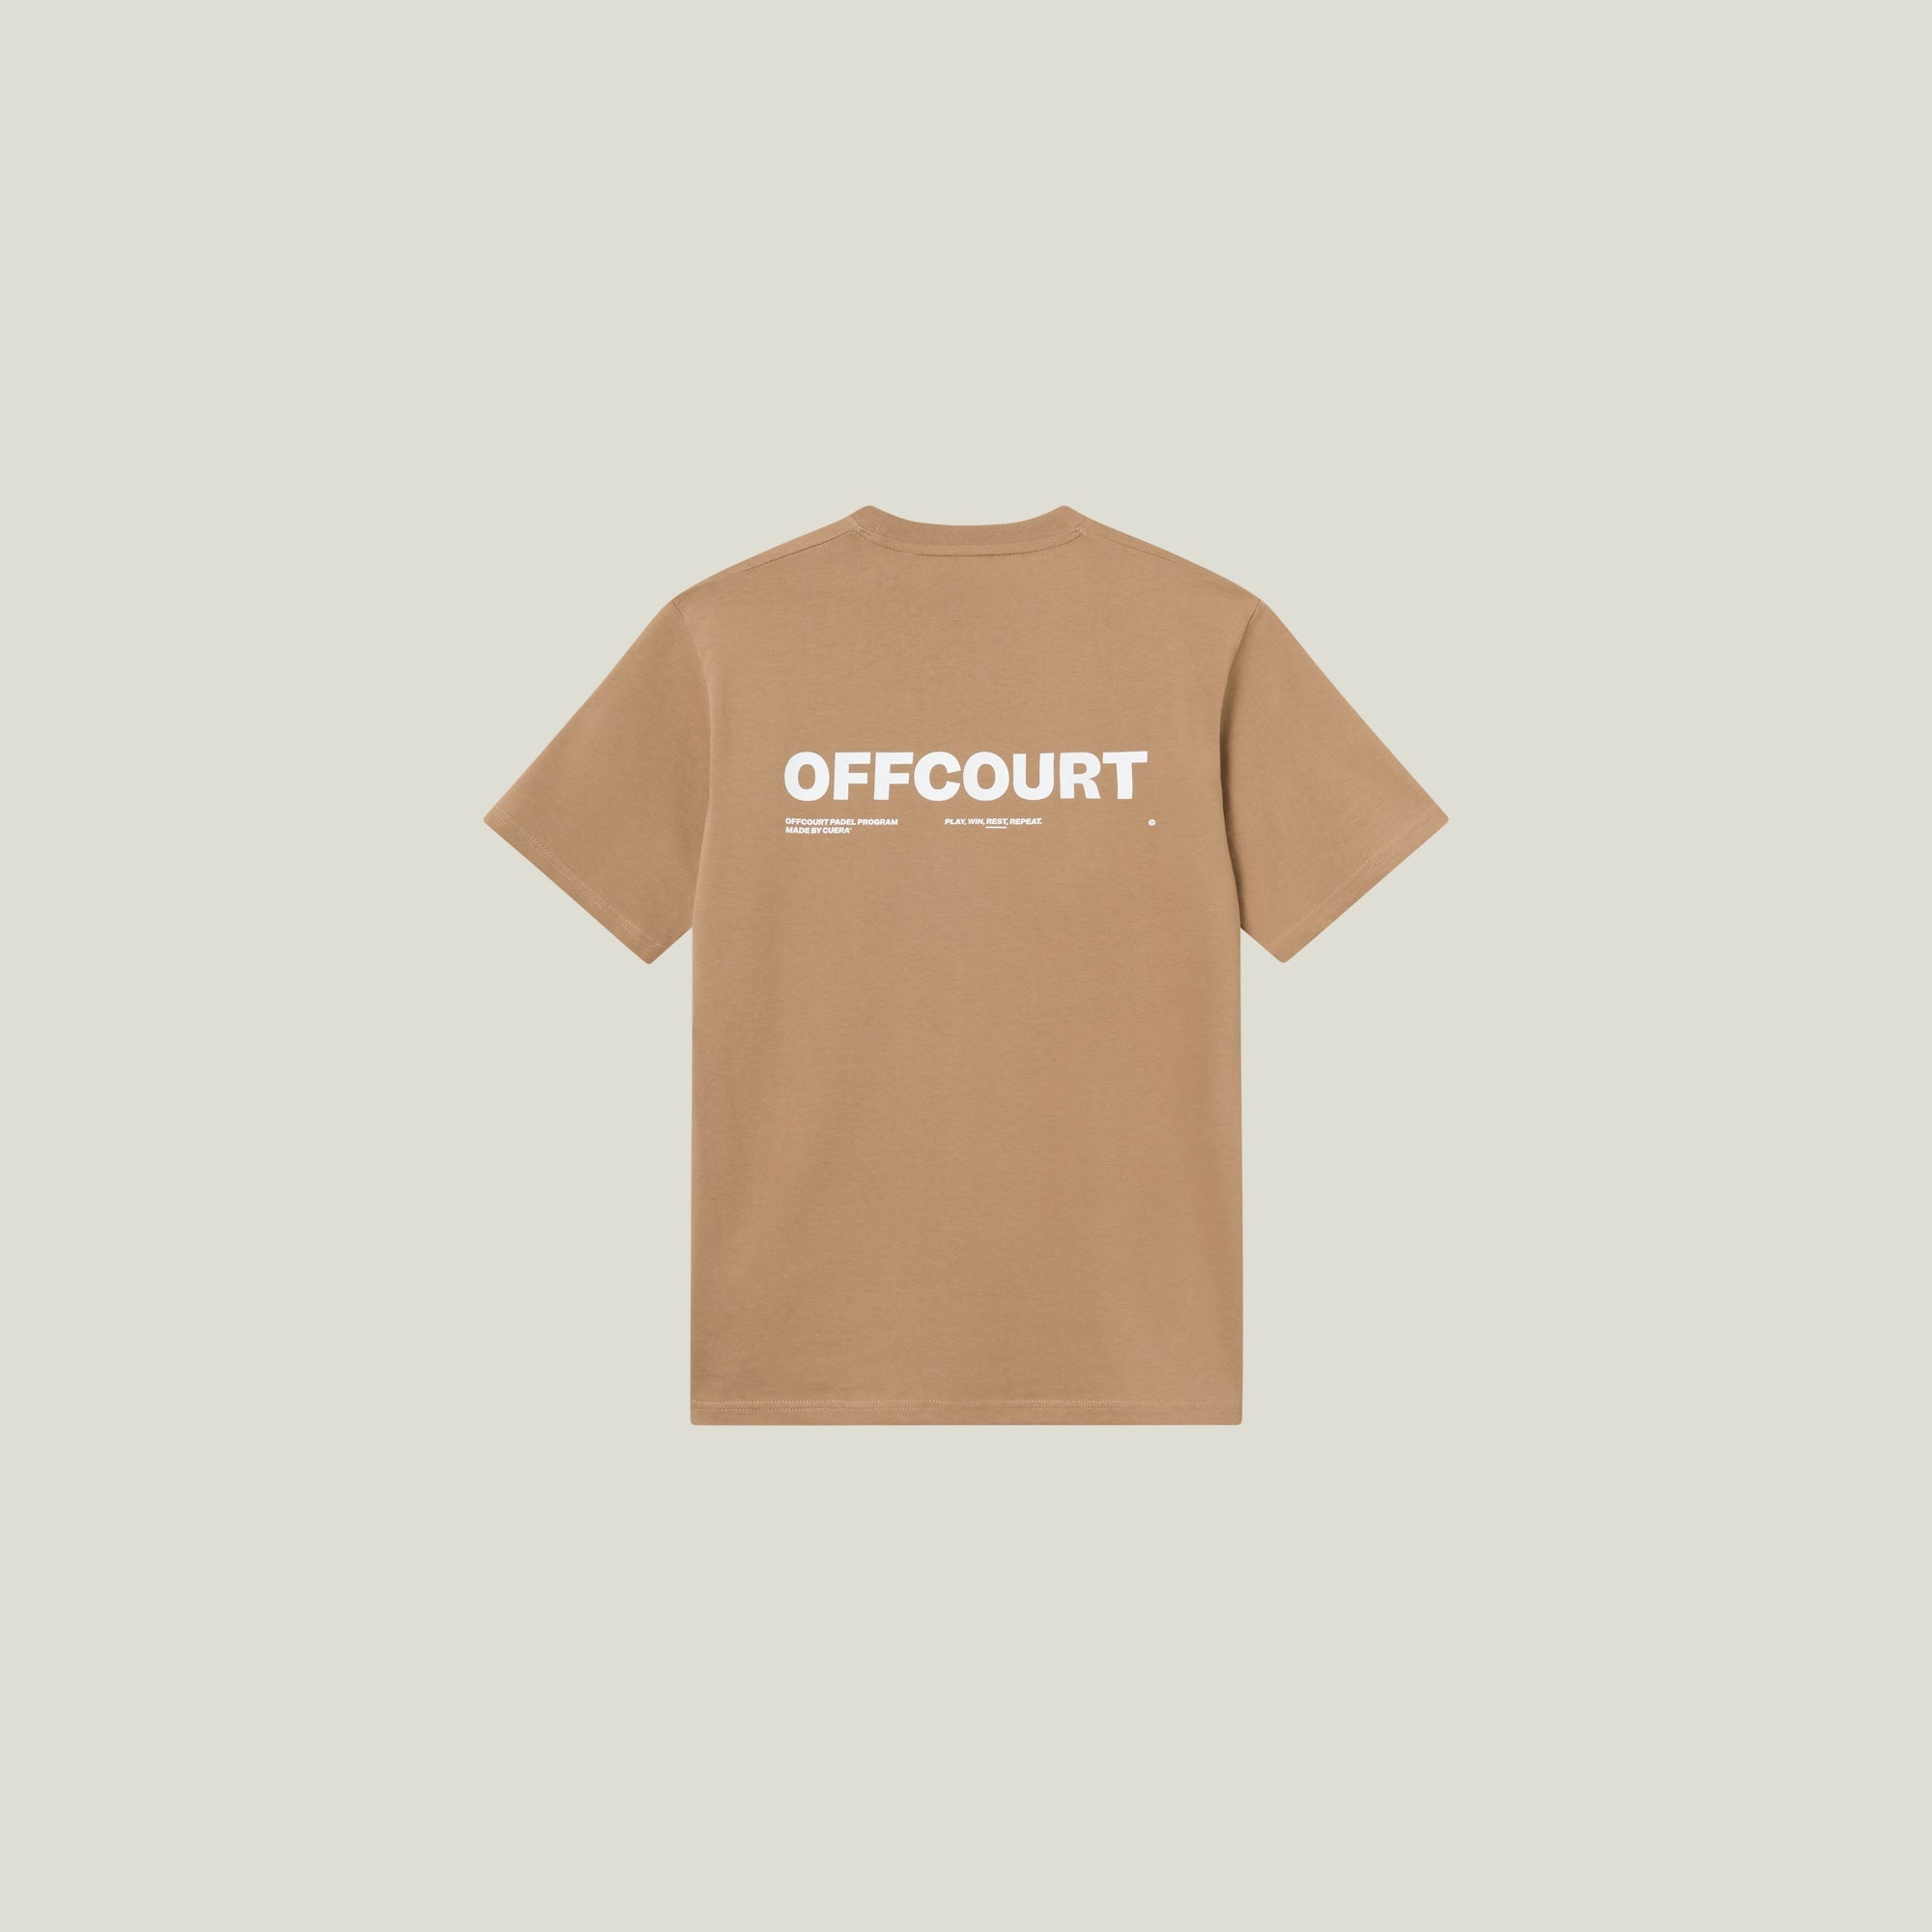 Relaxed Heavy Offcourt T-Shirt - Brown